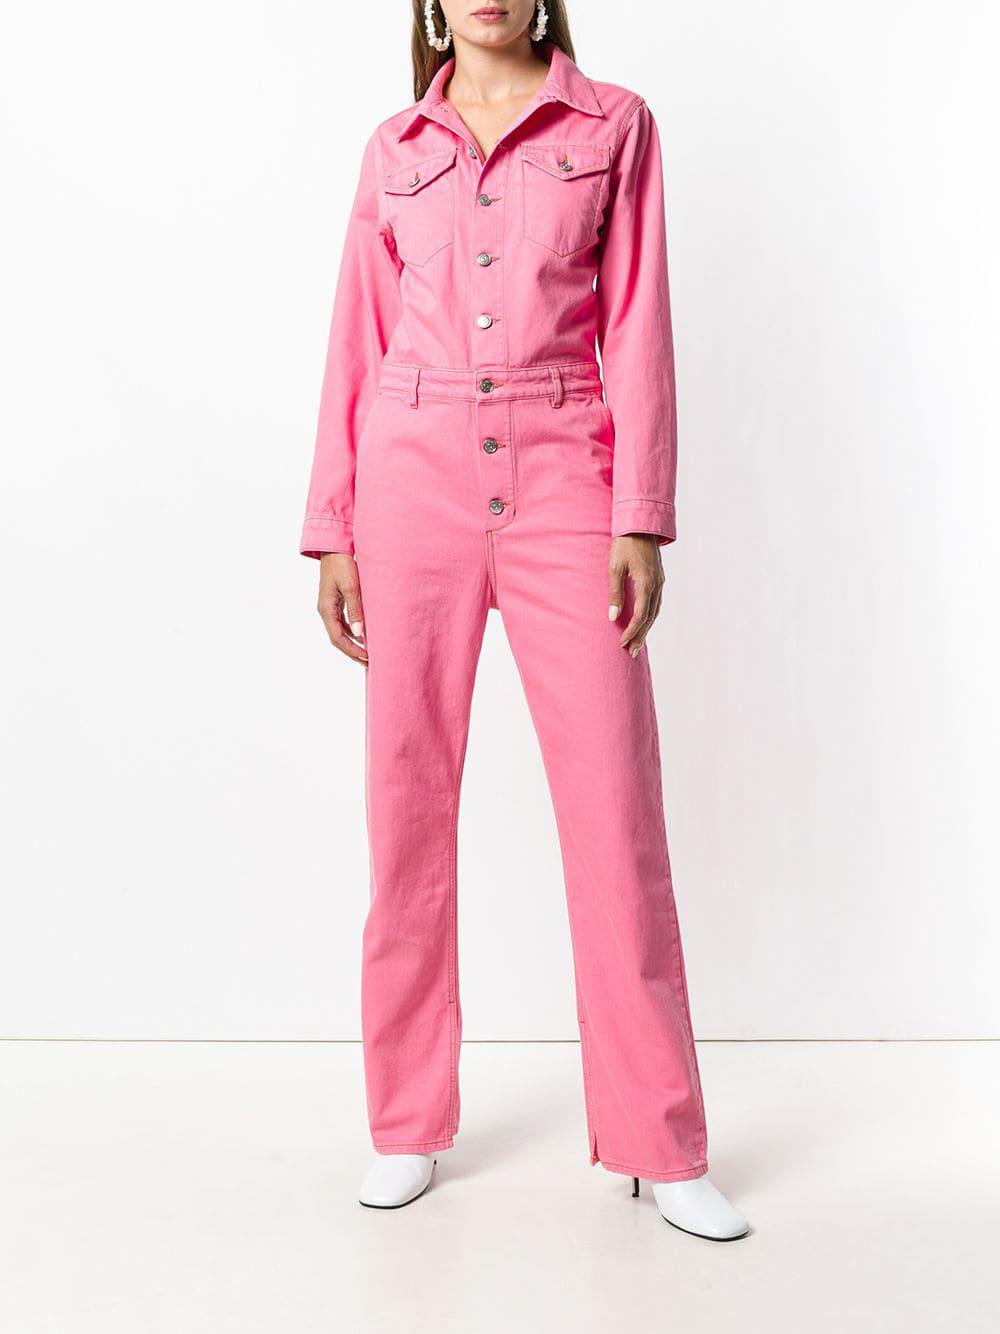 Ganni Cotton Denim Boiler Suit in Pink & Purple (Pink) - Lyst